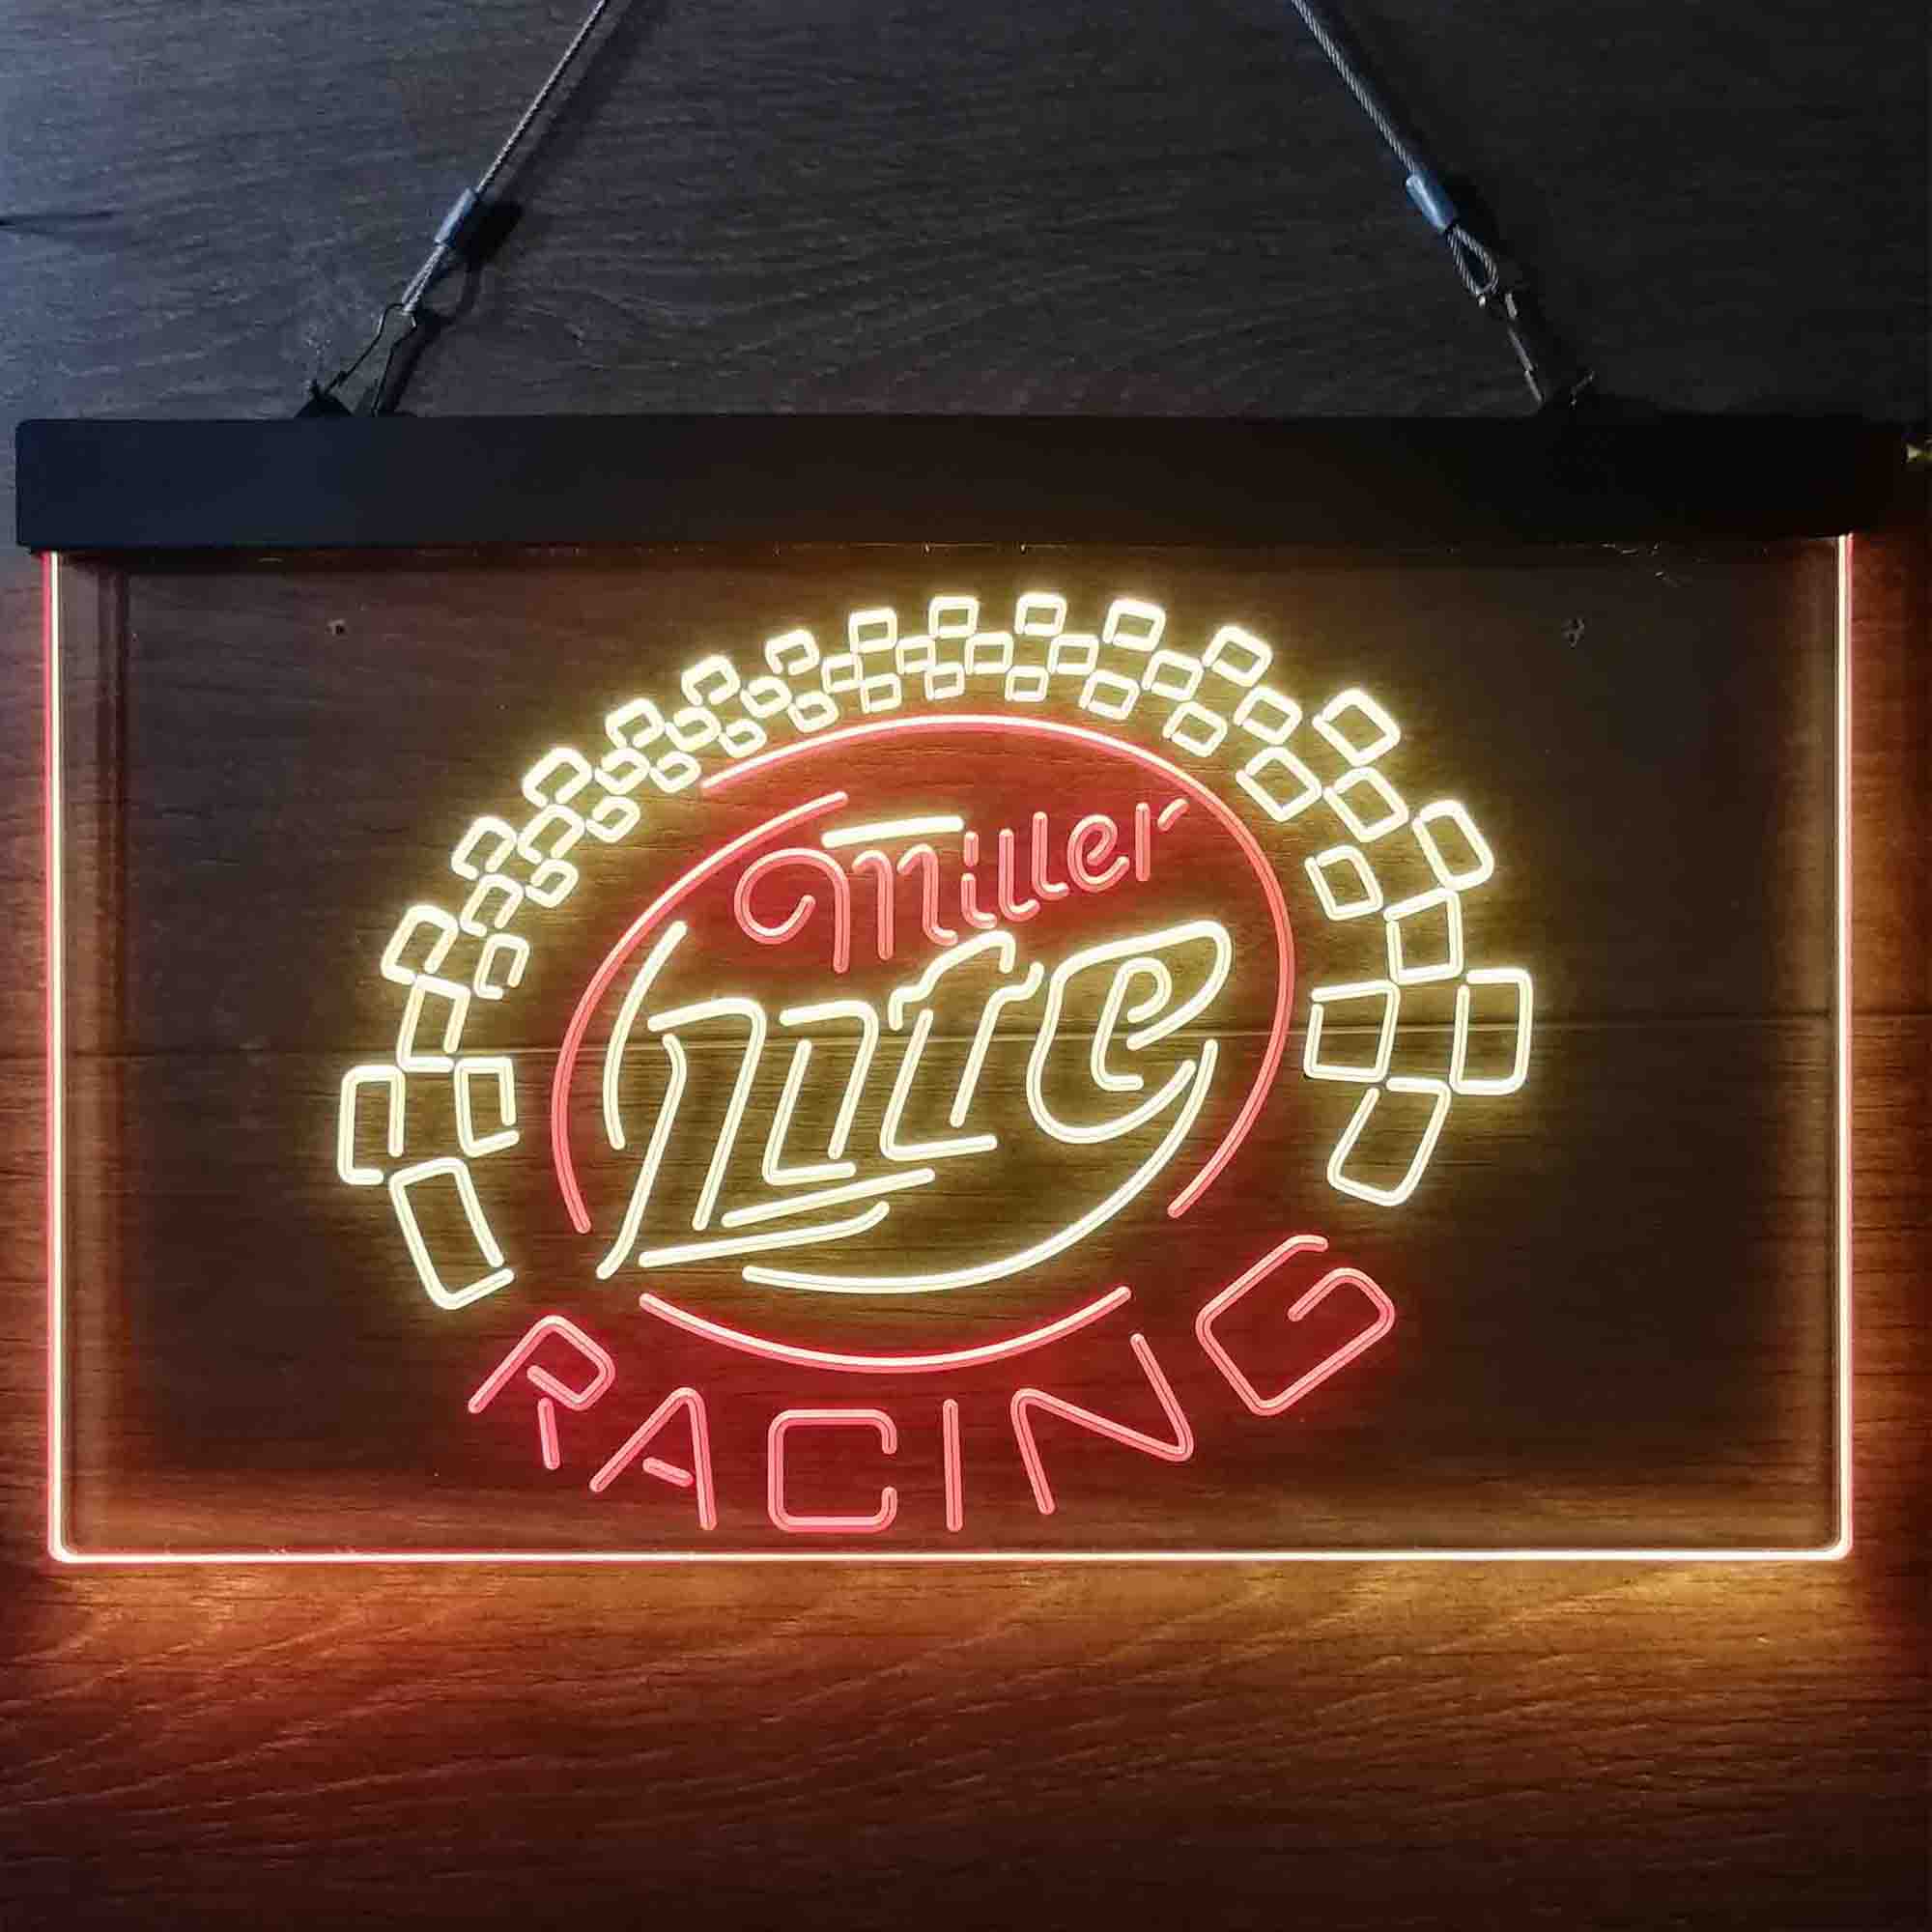 Miller Lite Racing Car LED Neon Sign